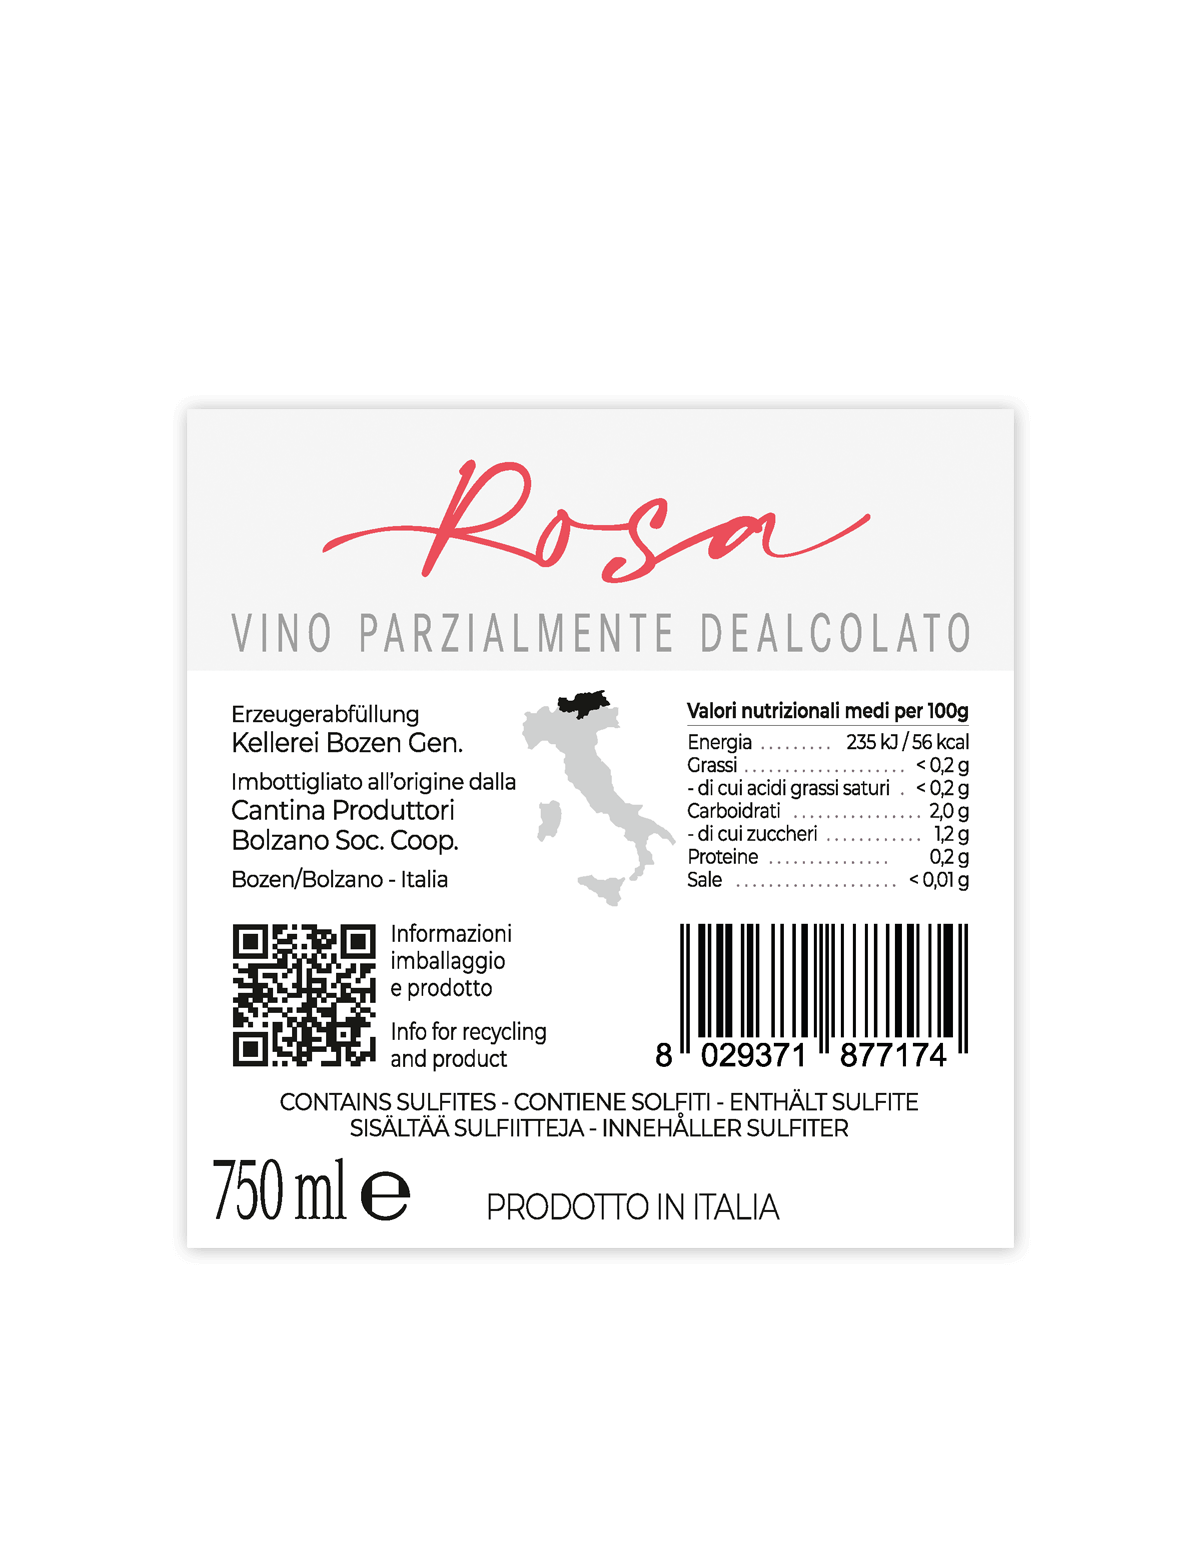 ROSA ROSÉ partially dealcoholized